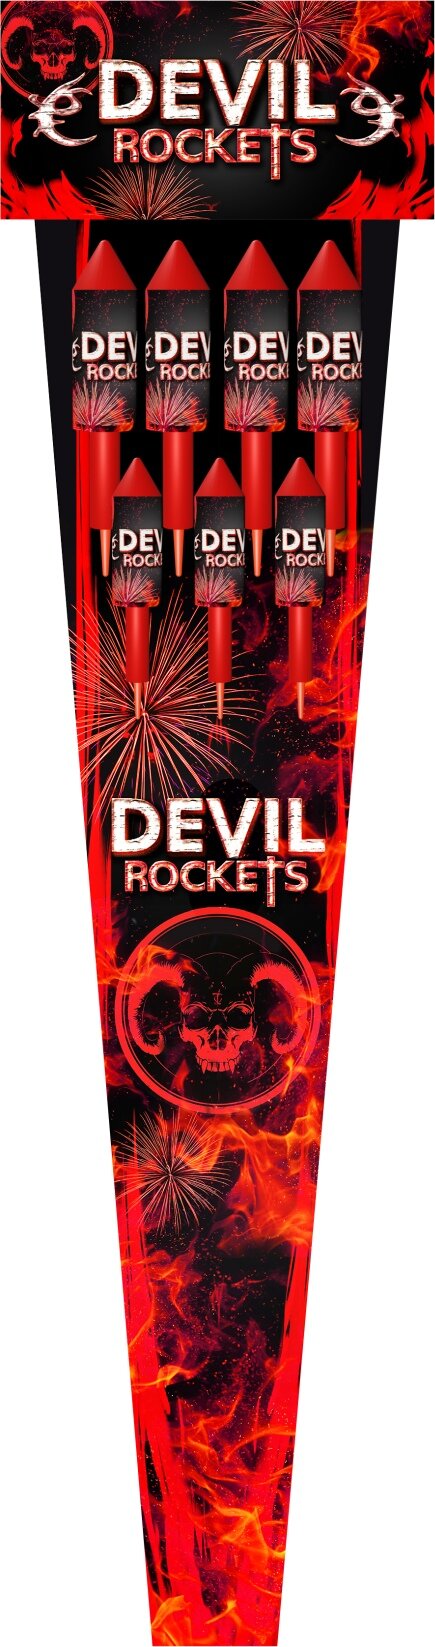 Devil rocket / 7ks /